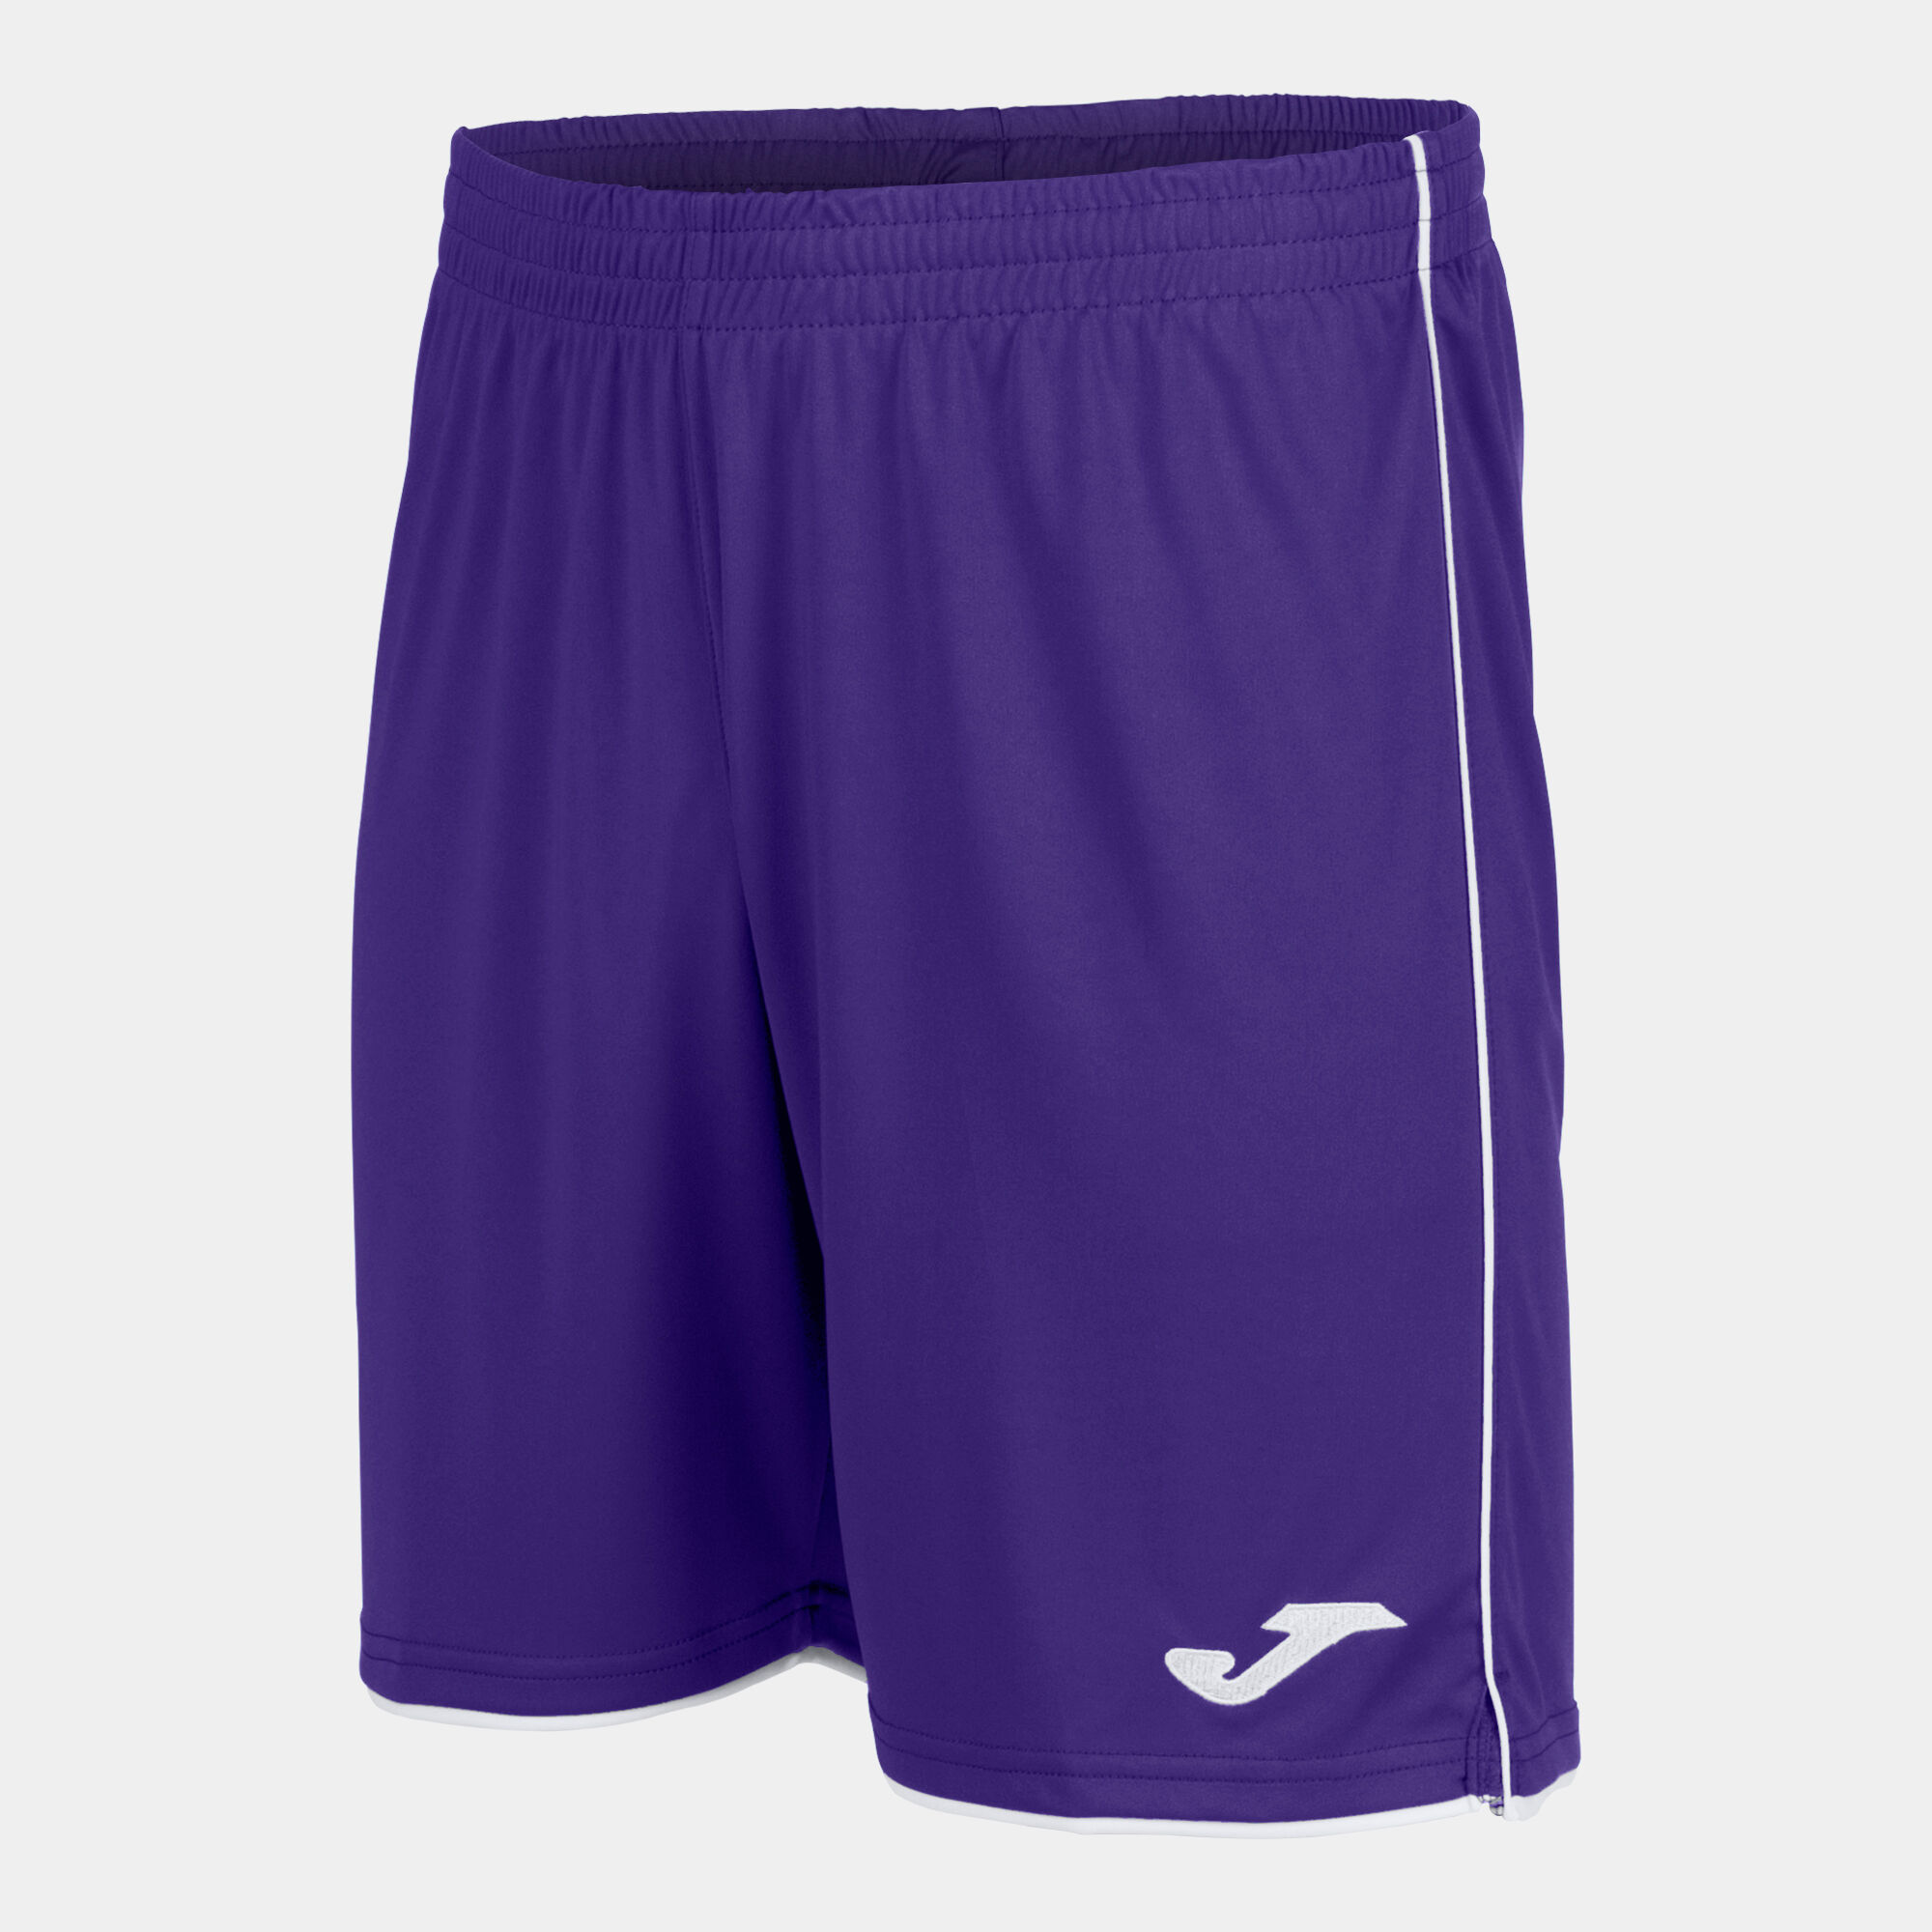 Shorts man Liga purple white